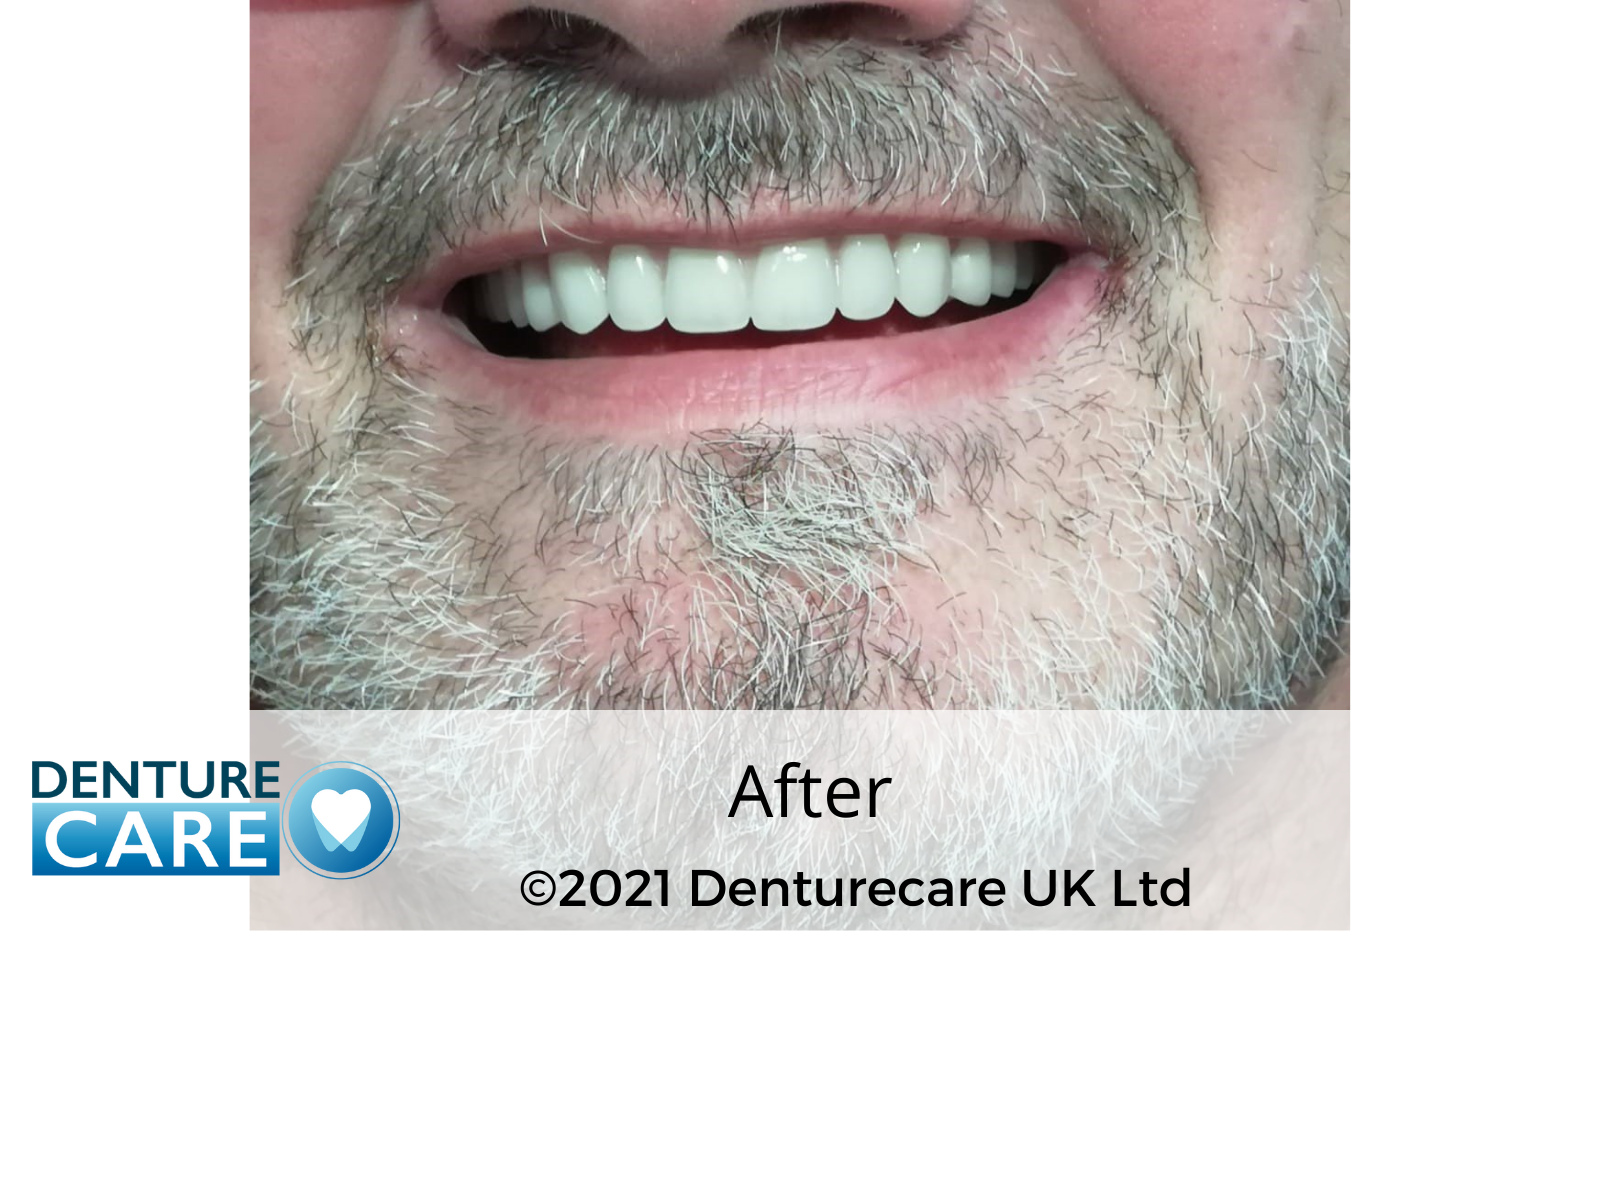 After new dentures